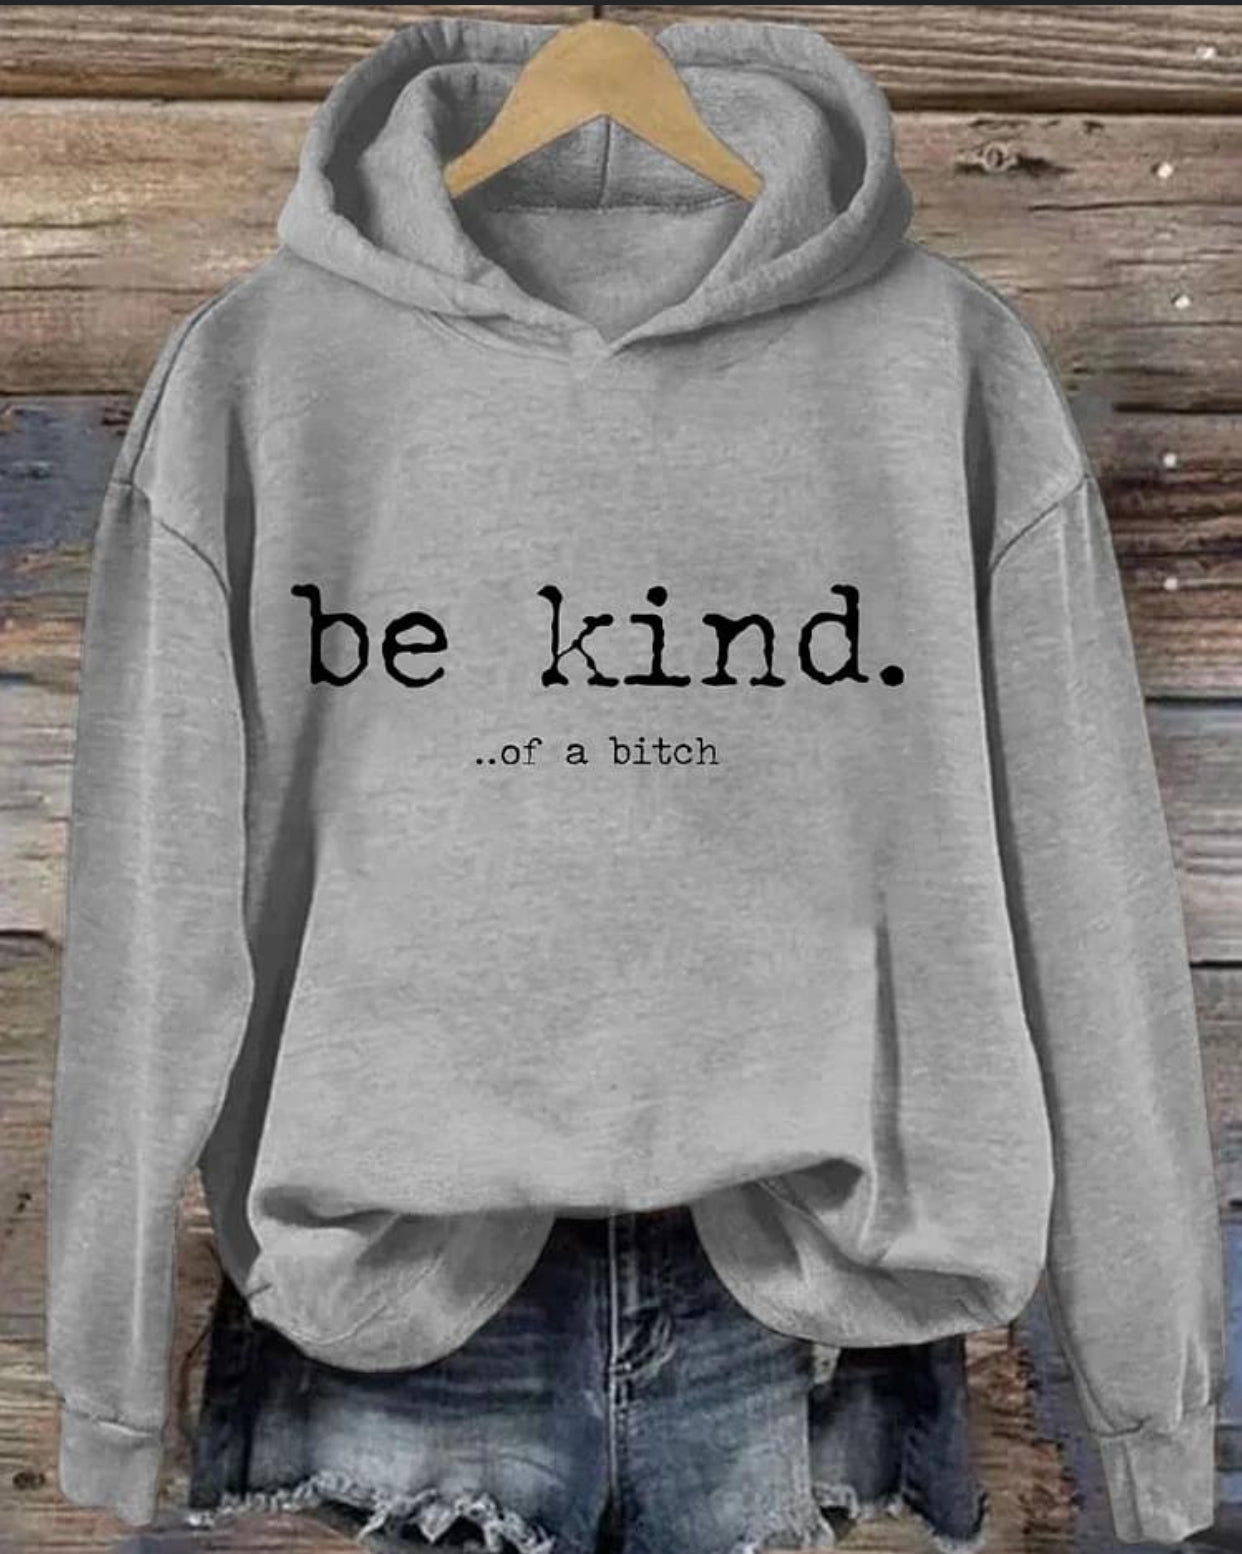 Be kind of….crewneck sweatshirt